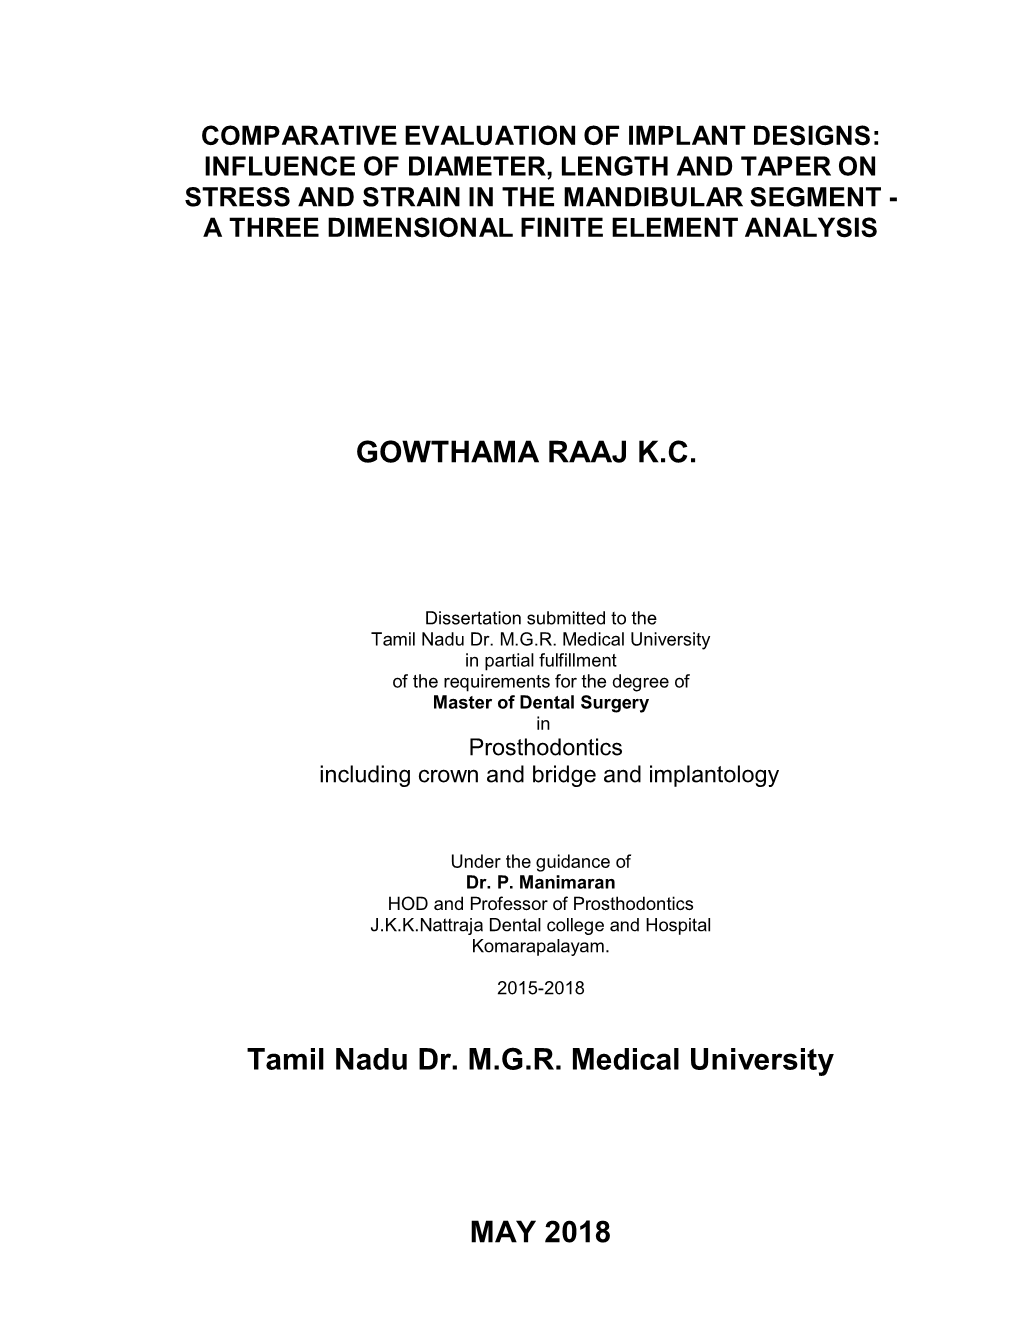 GOWTHAMA RAAJ K.C. Tamil Nadu Dr. M.G.R. Medical University MAY